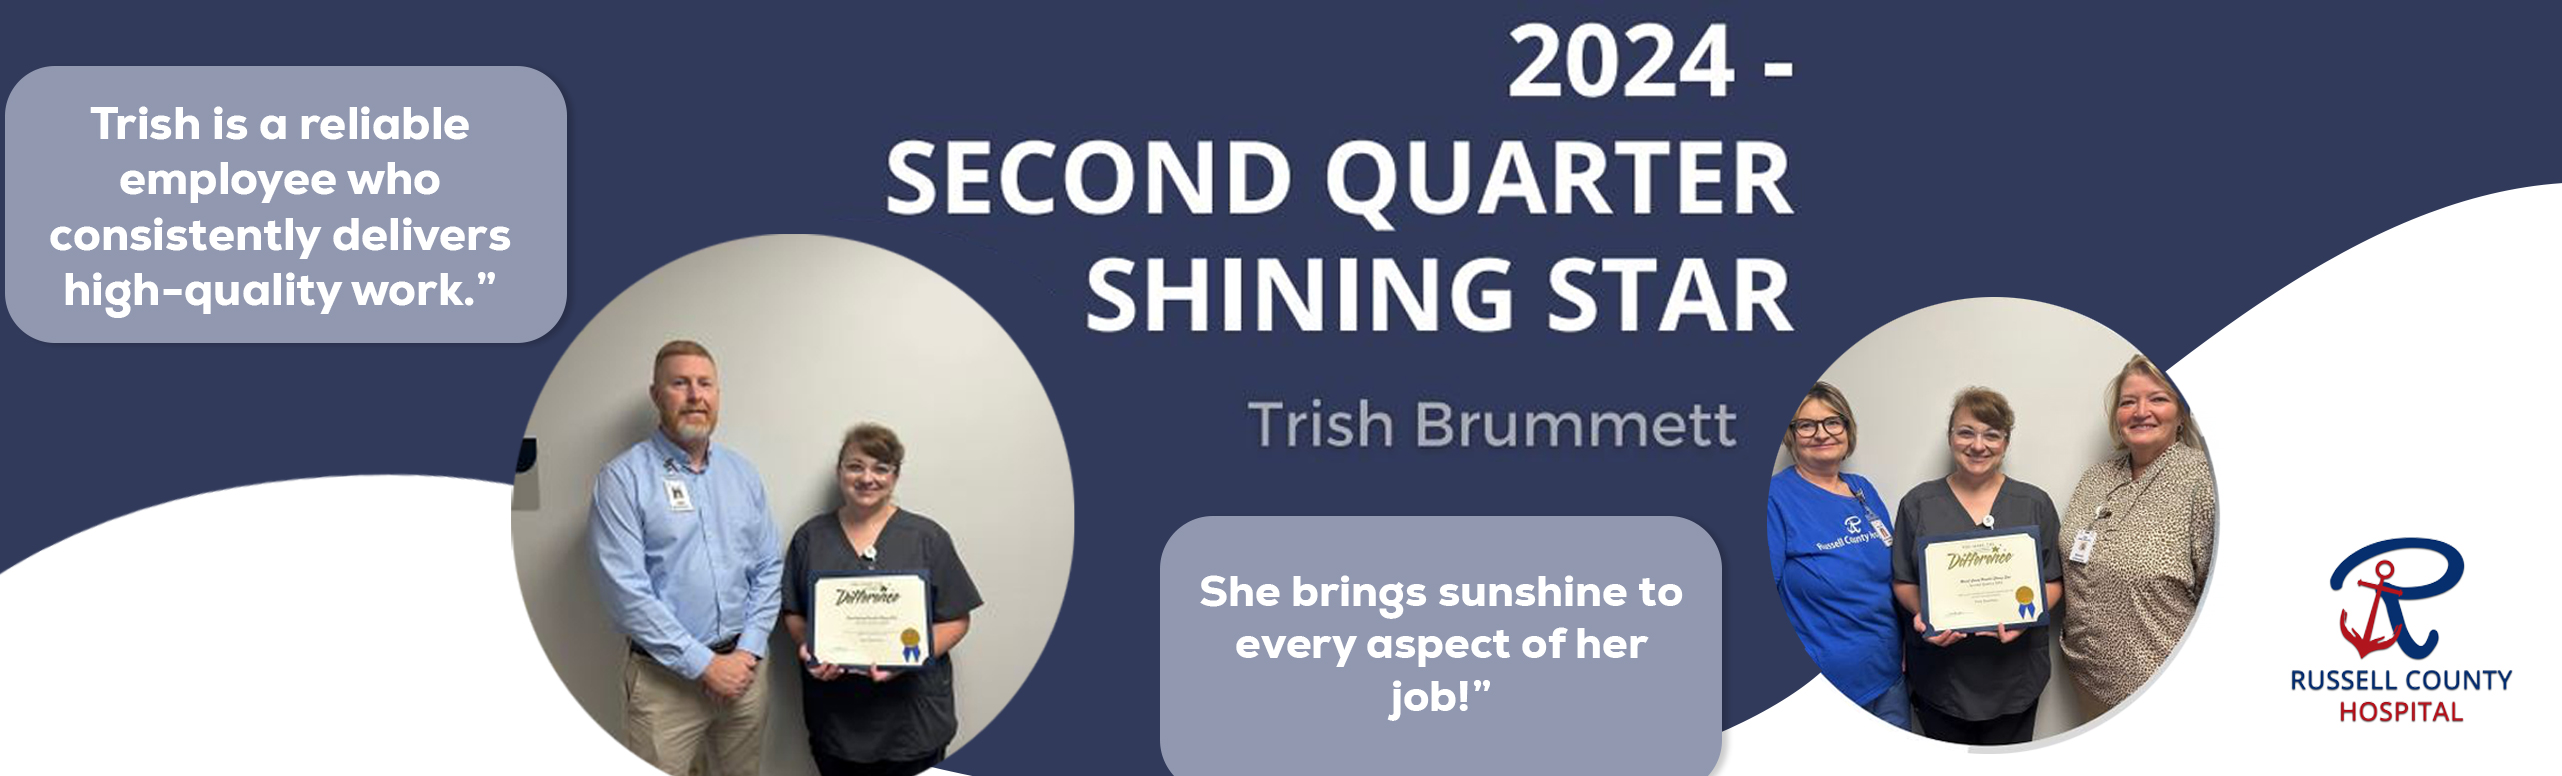 Trish Brummett is second quarter shining star